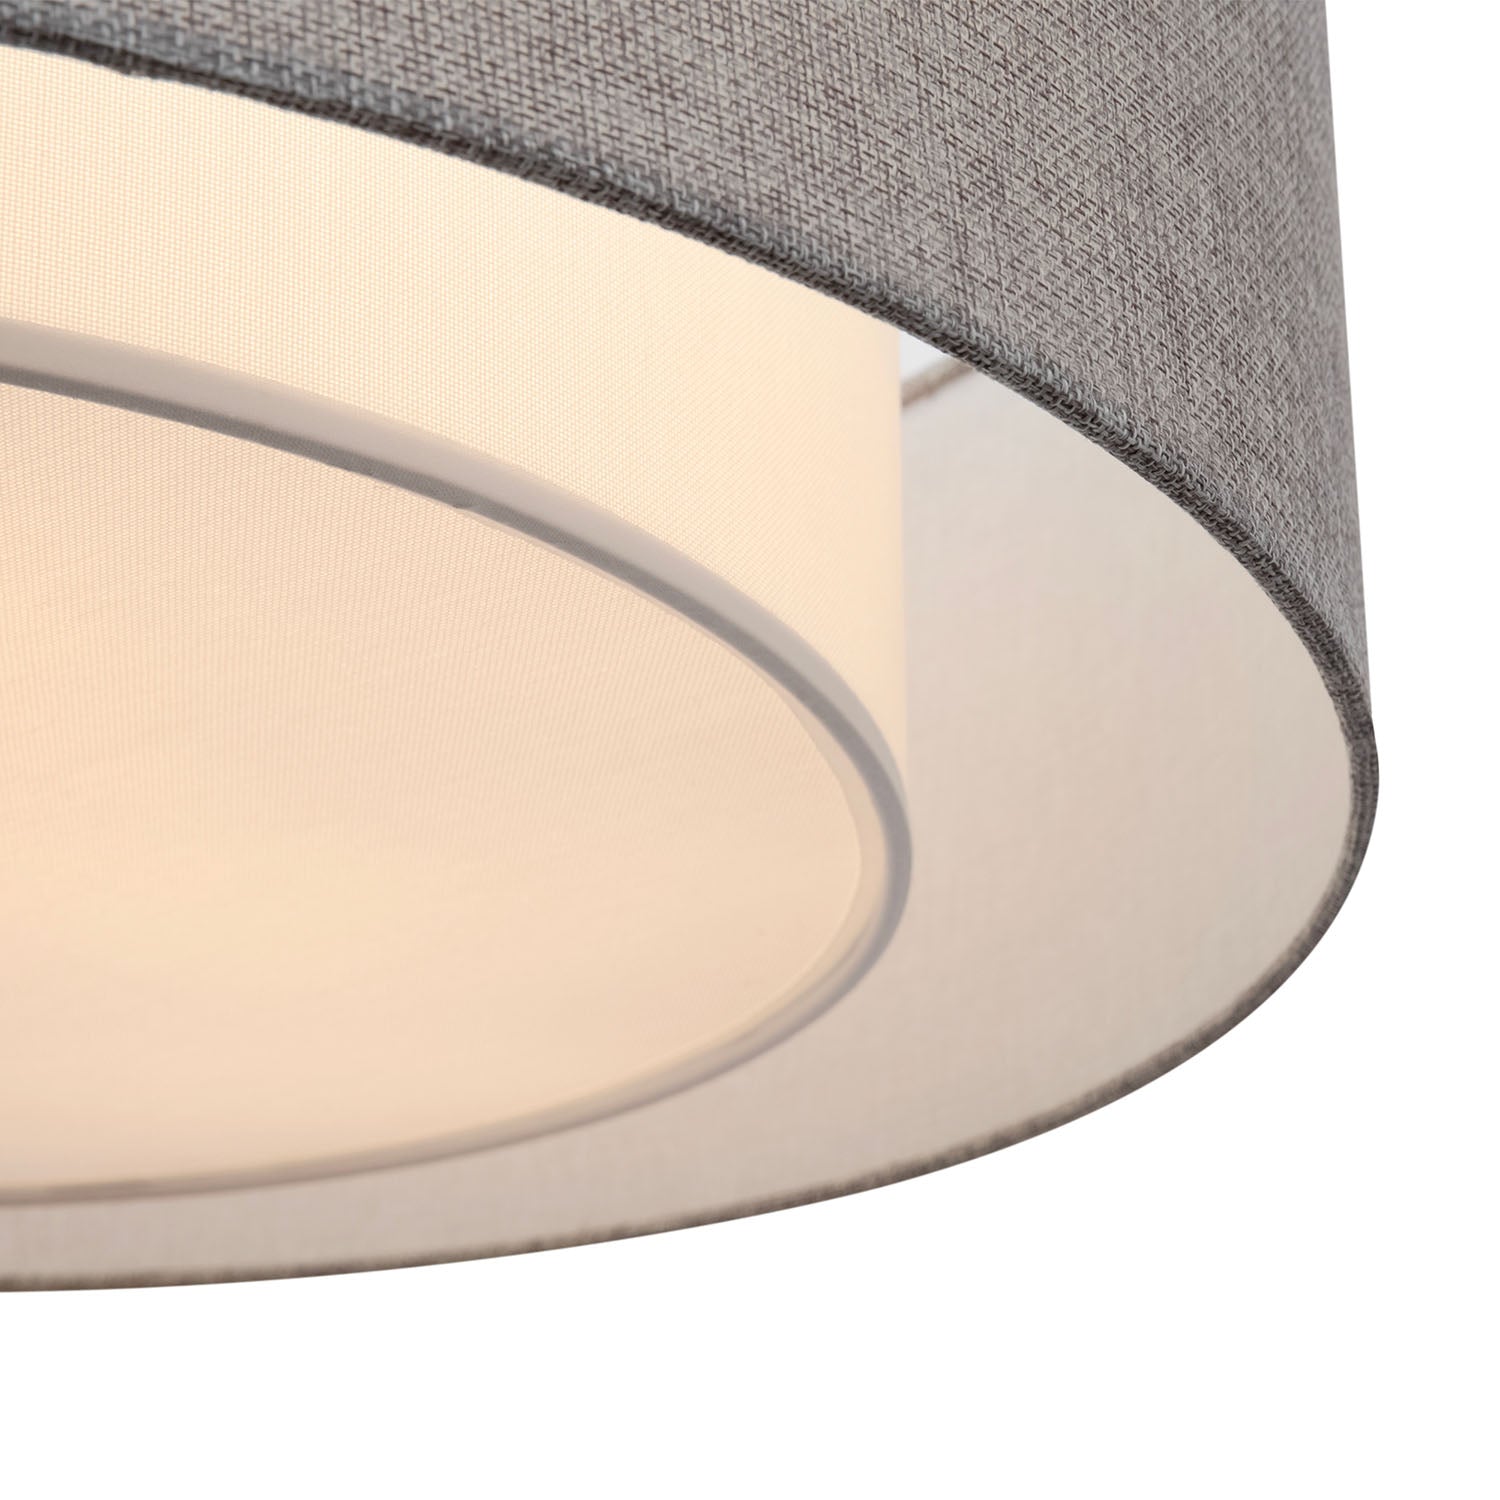 BERGAMO - Fabric ceiling lamp, gray or white for children's rooms